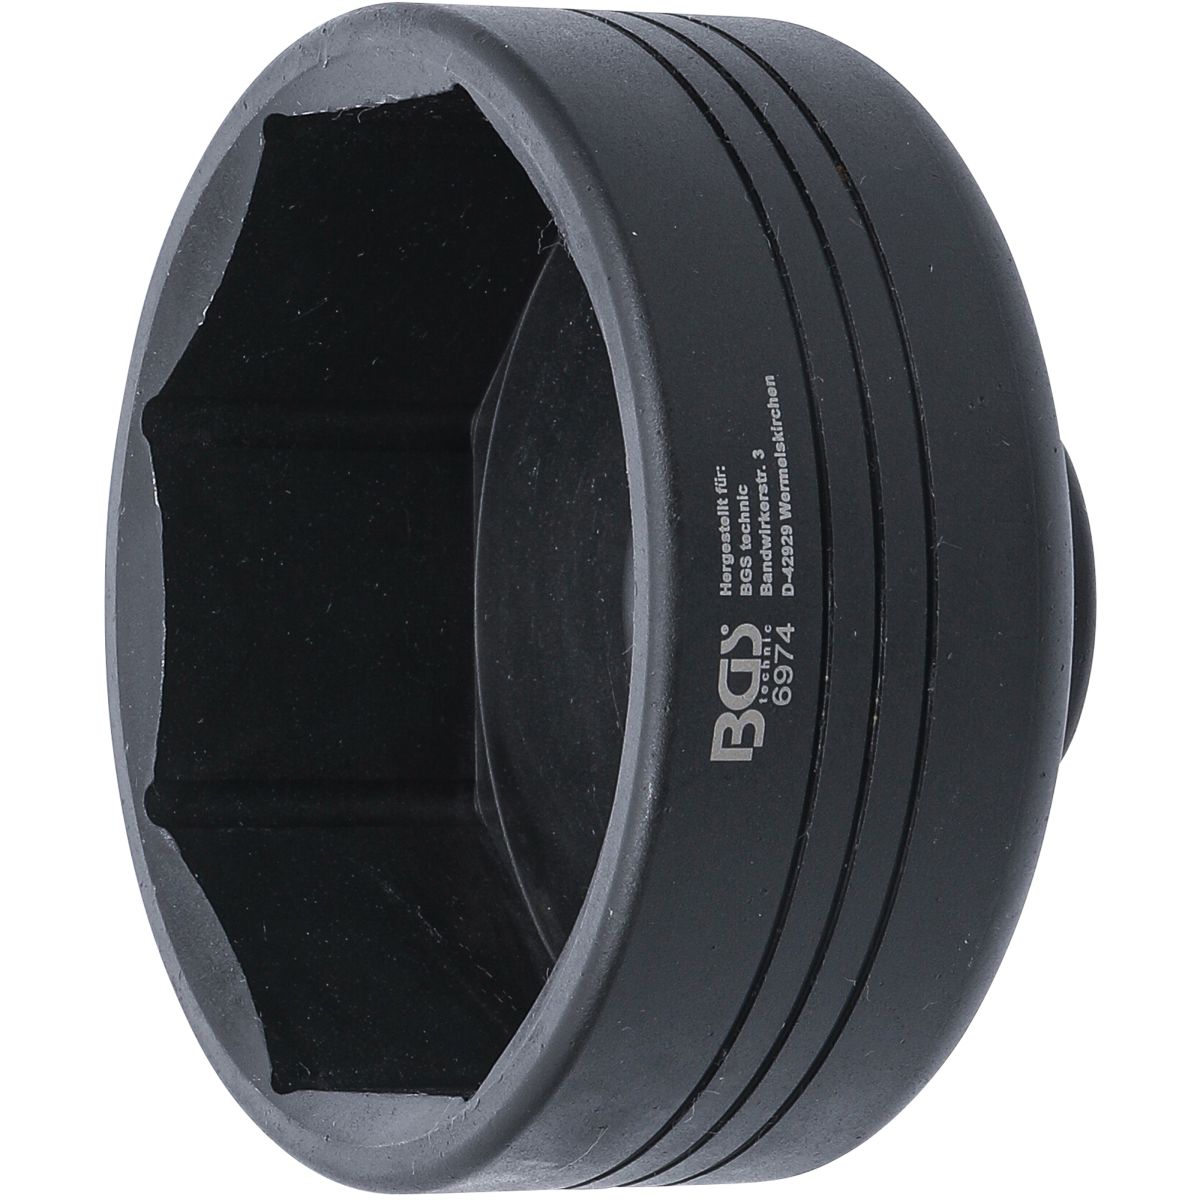 Axle Cap Socket | for BPW 16 t Trailer Axle Caps | 110 mm